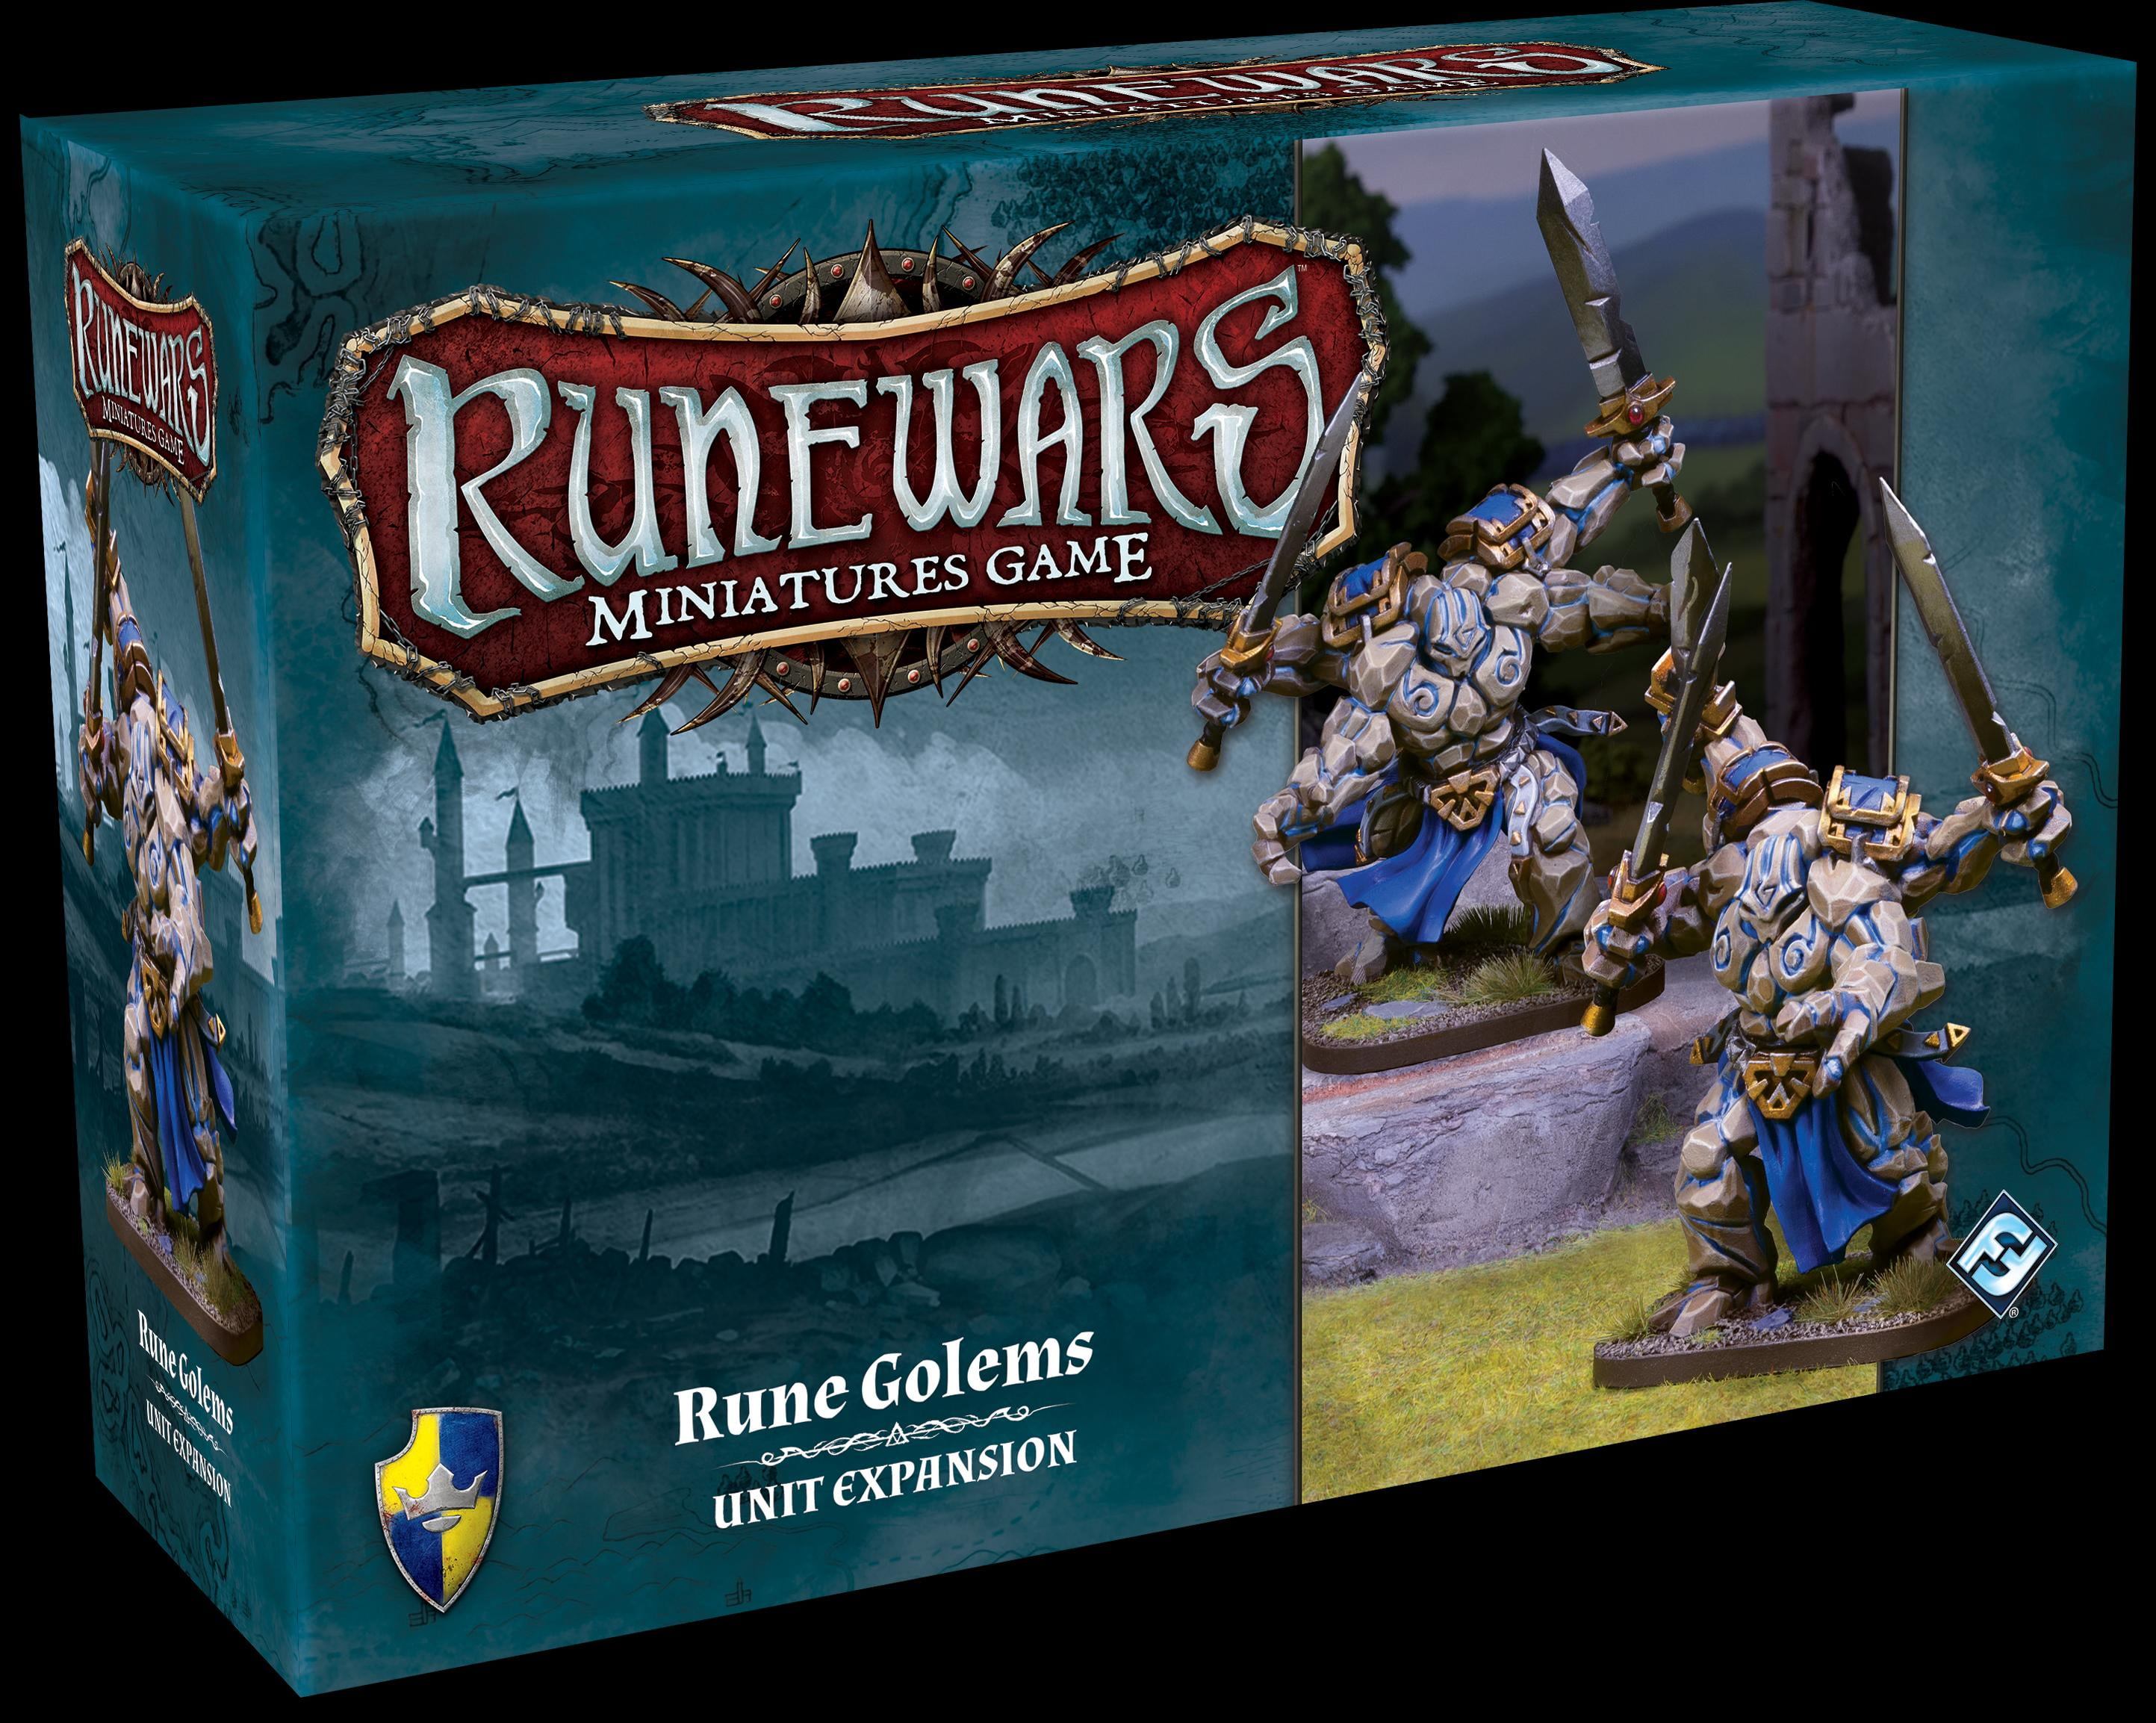 Rune golems unit expansion-Runewars Miniature Game 